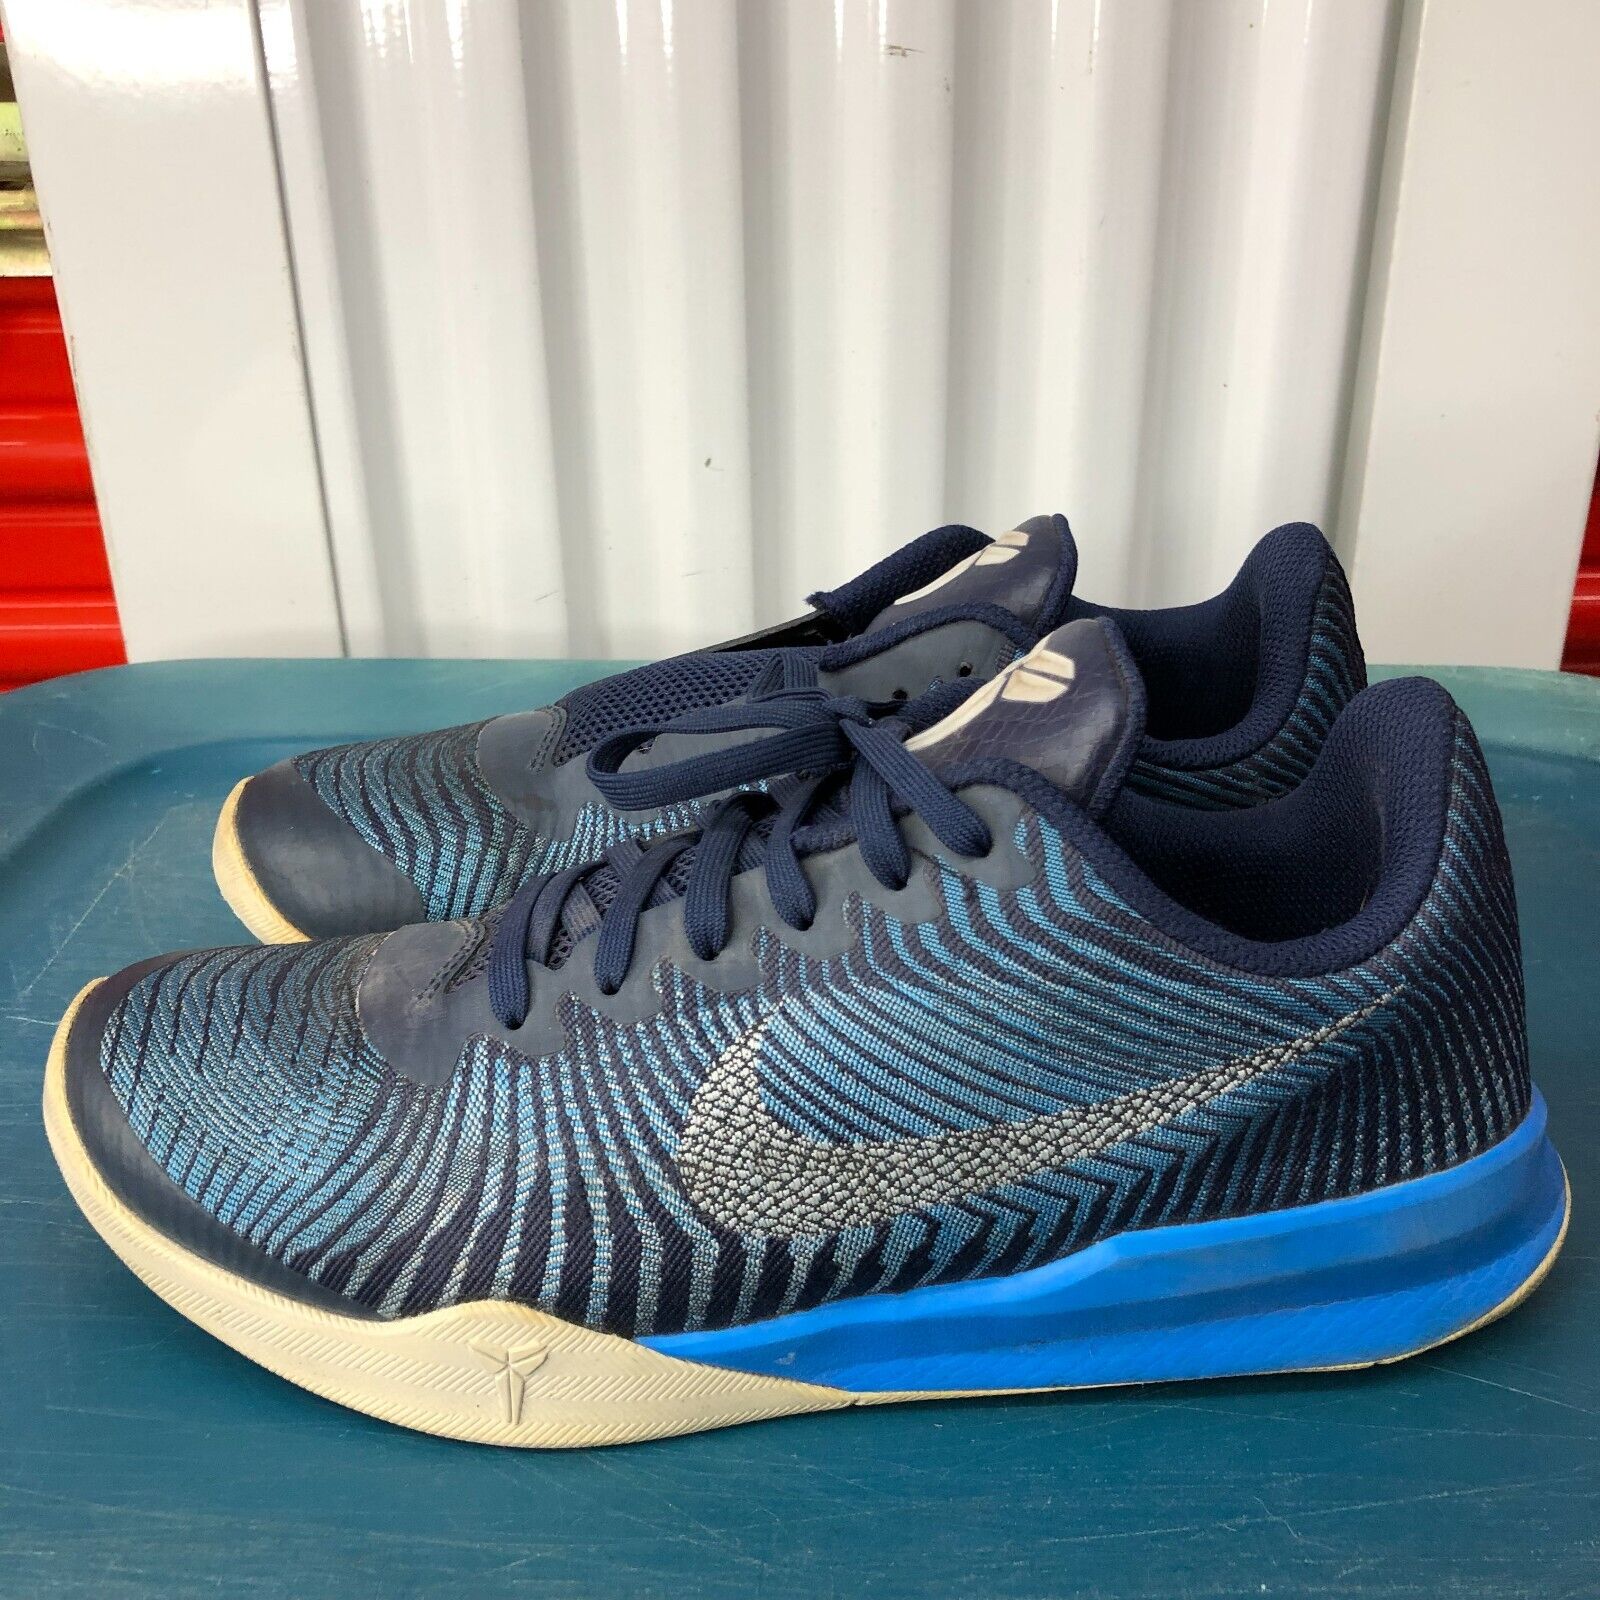 champán serie secuencia Nike KB Kobe Mentality 2 Mens 8 Us Shoes Midnight Navy Blue Sneakers  818952-400 | eBay